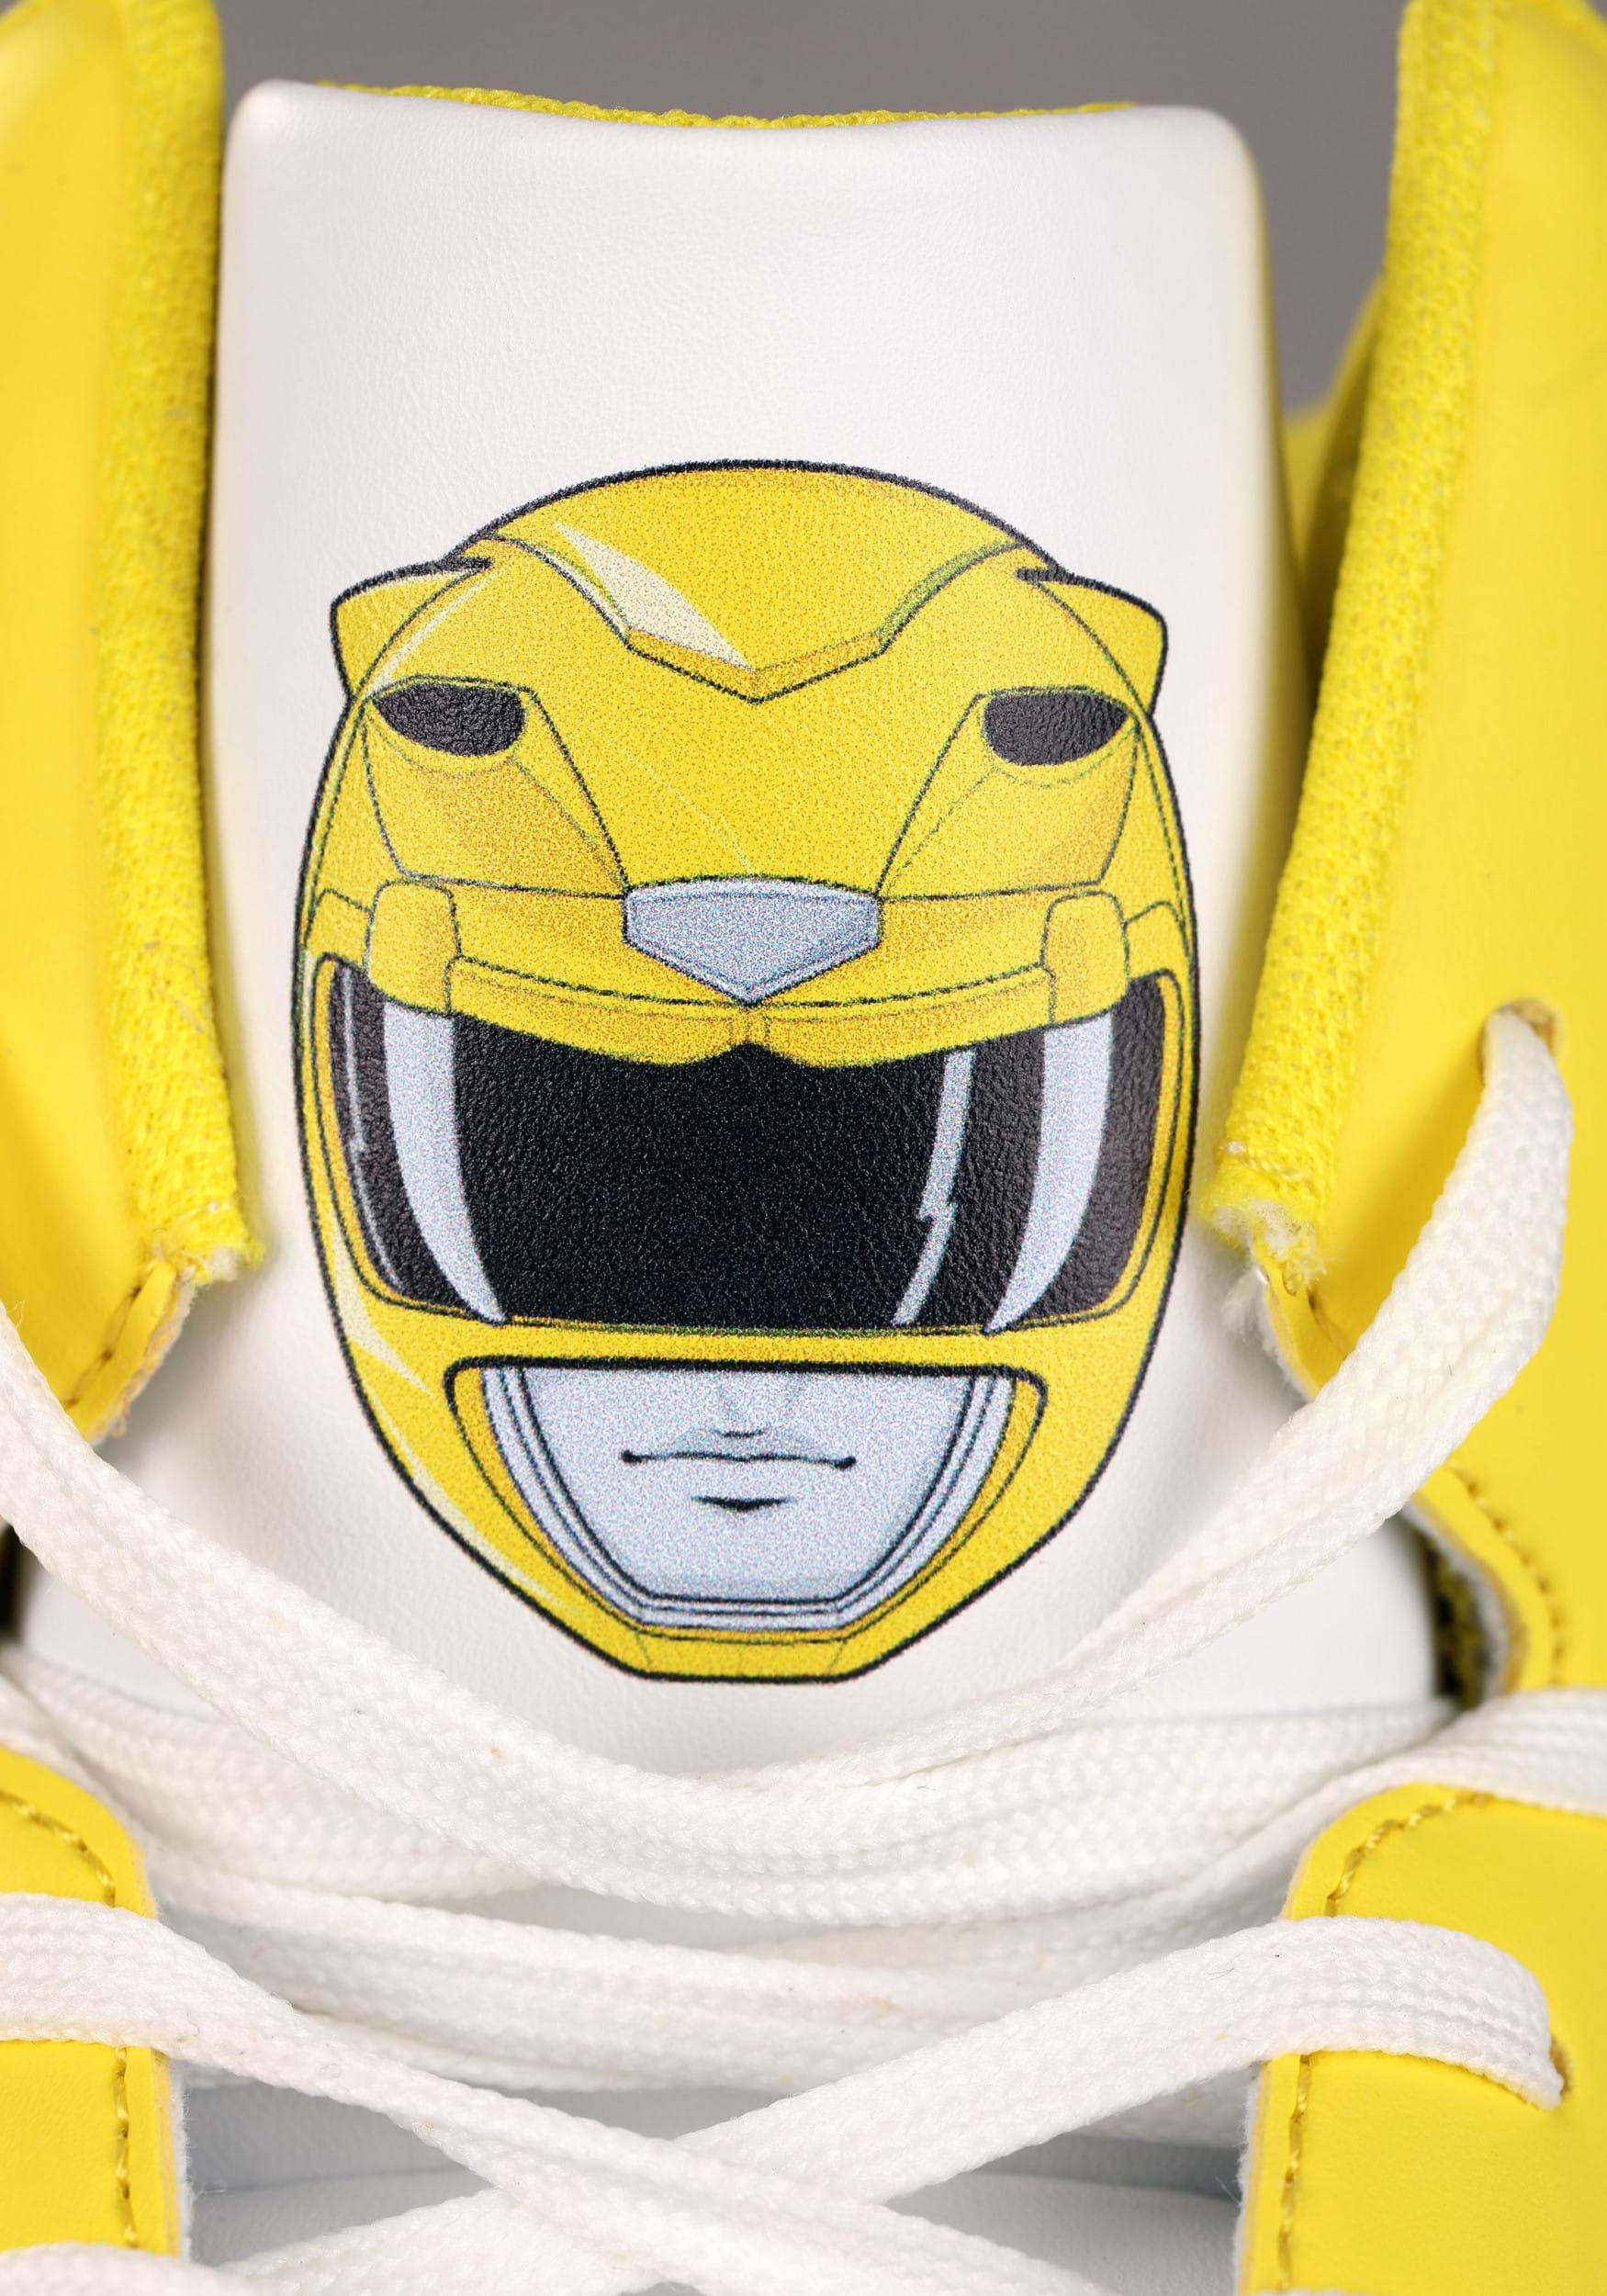 Costume Inspired Power Rangers Yellow Sneakers